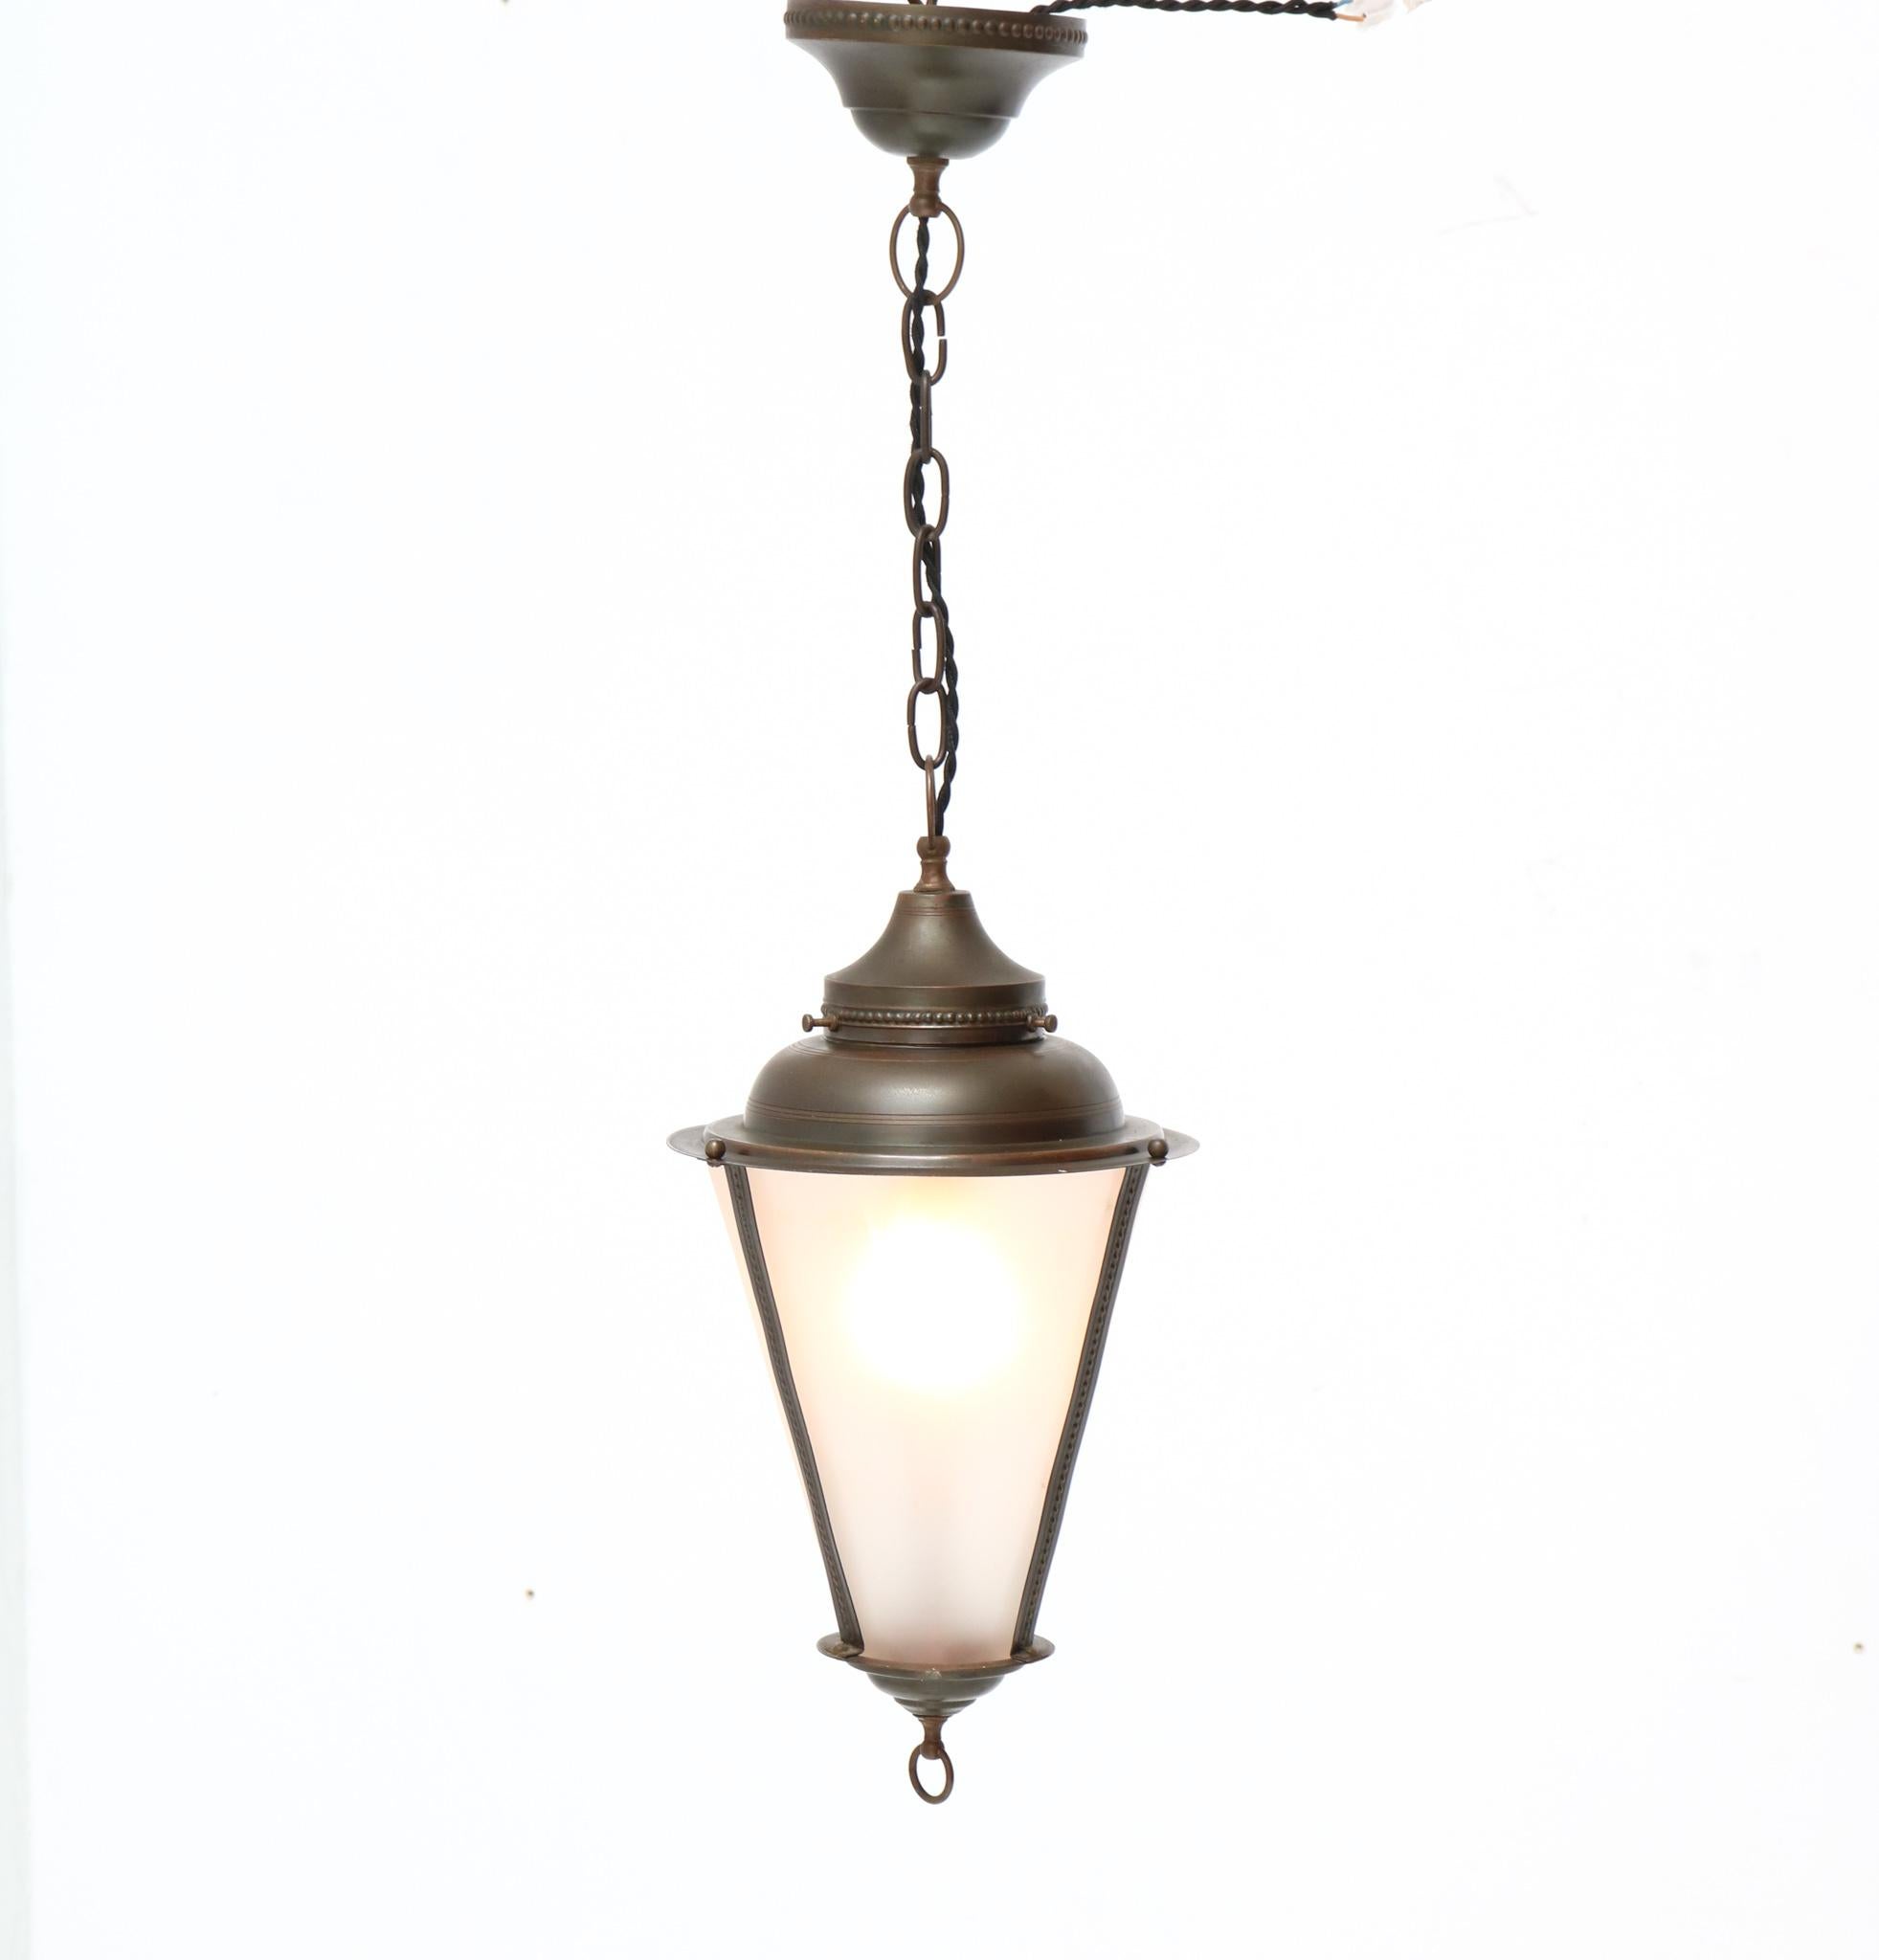 Etched Patinated Brass Art Nouveau Lantern, 1900s